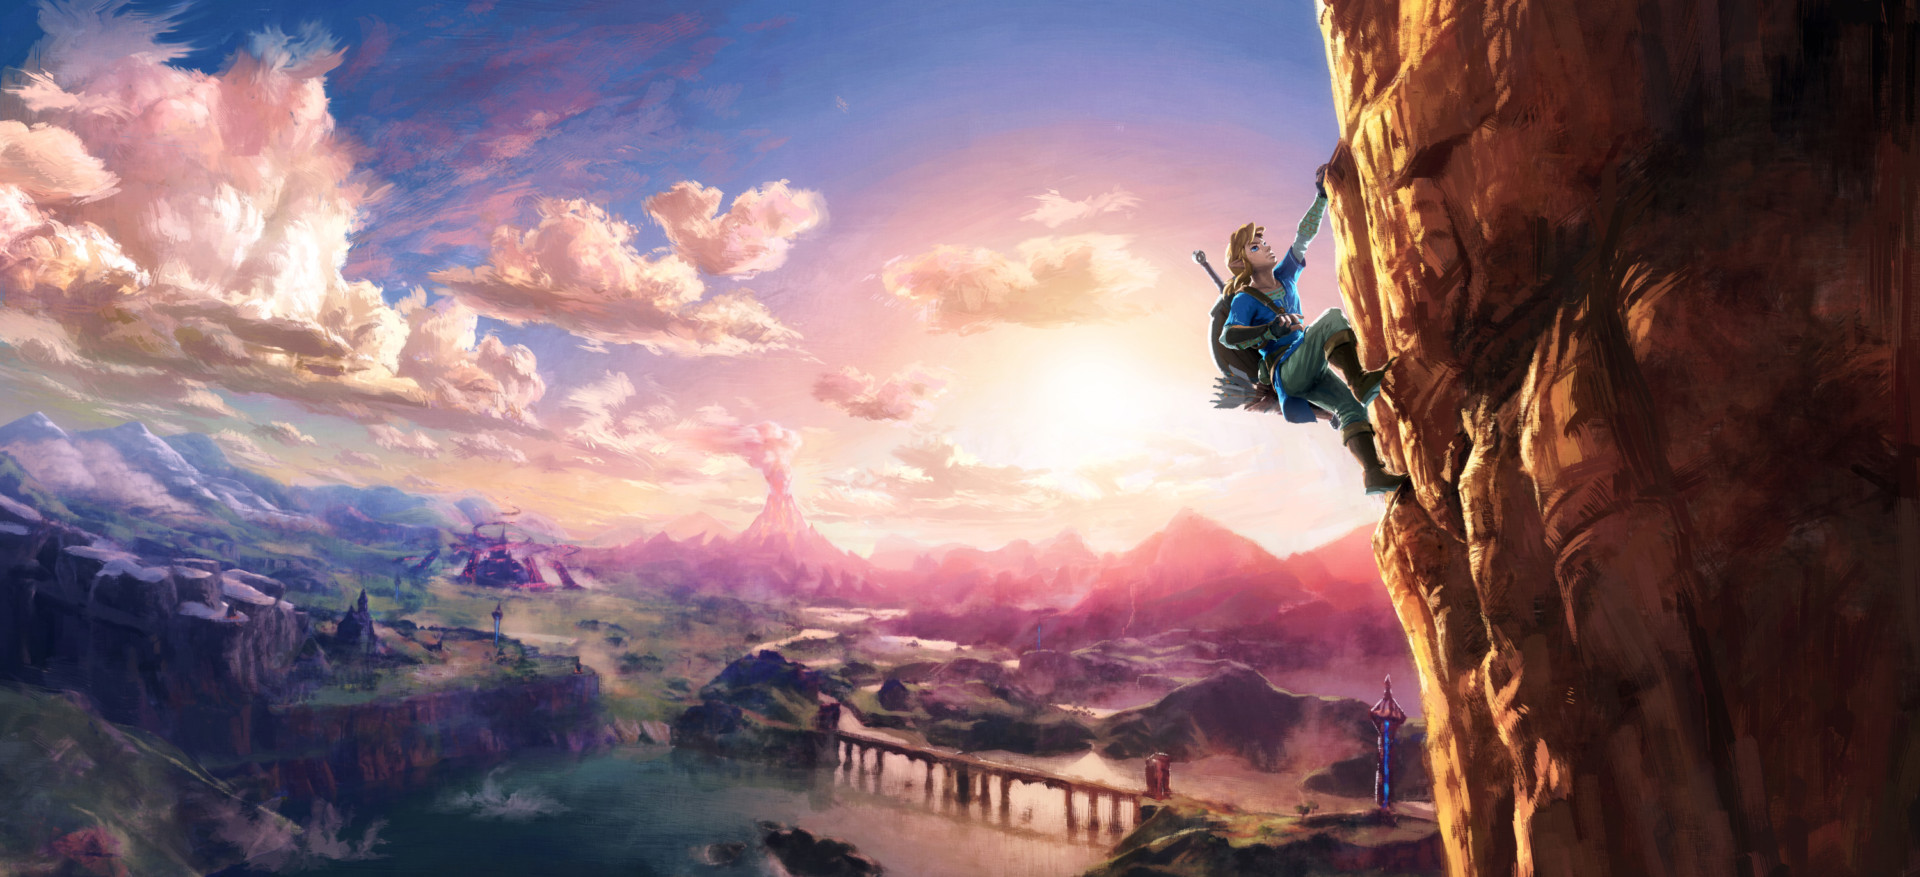 video games are always delayed, 2020 delays, The Legend of Zelda: Breath of the Wild